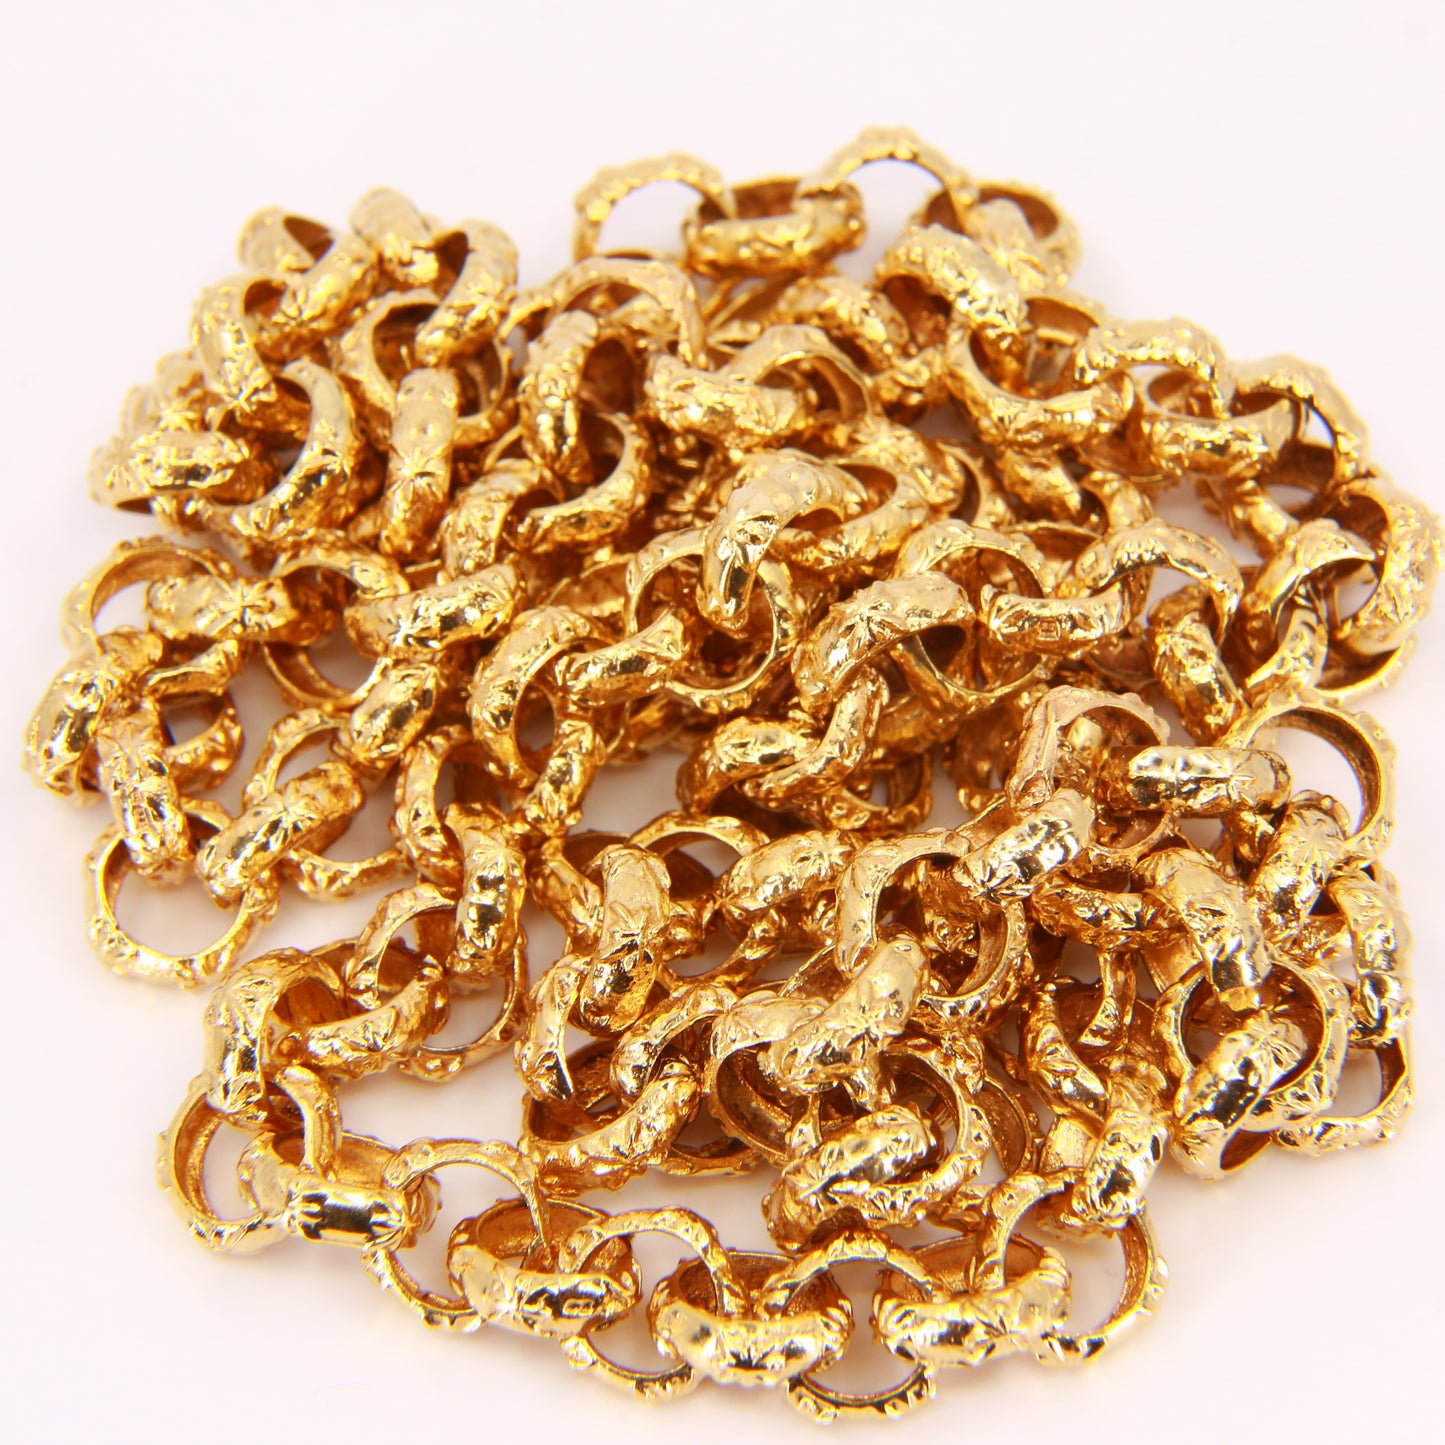 Large Vintage 9ct Belcher Chain Necklace 9 Carat Hallmarked 1975 Yellow Gold